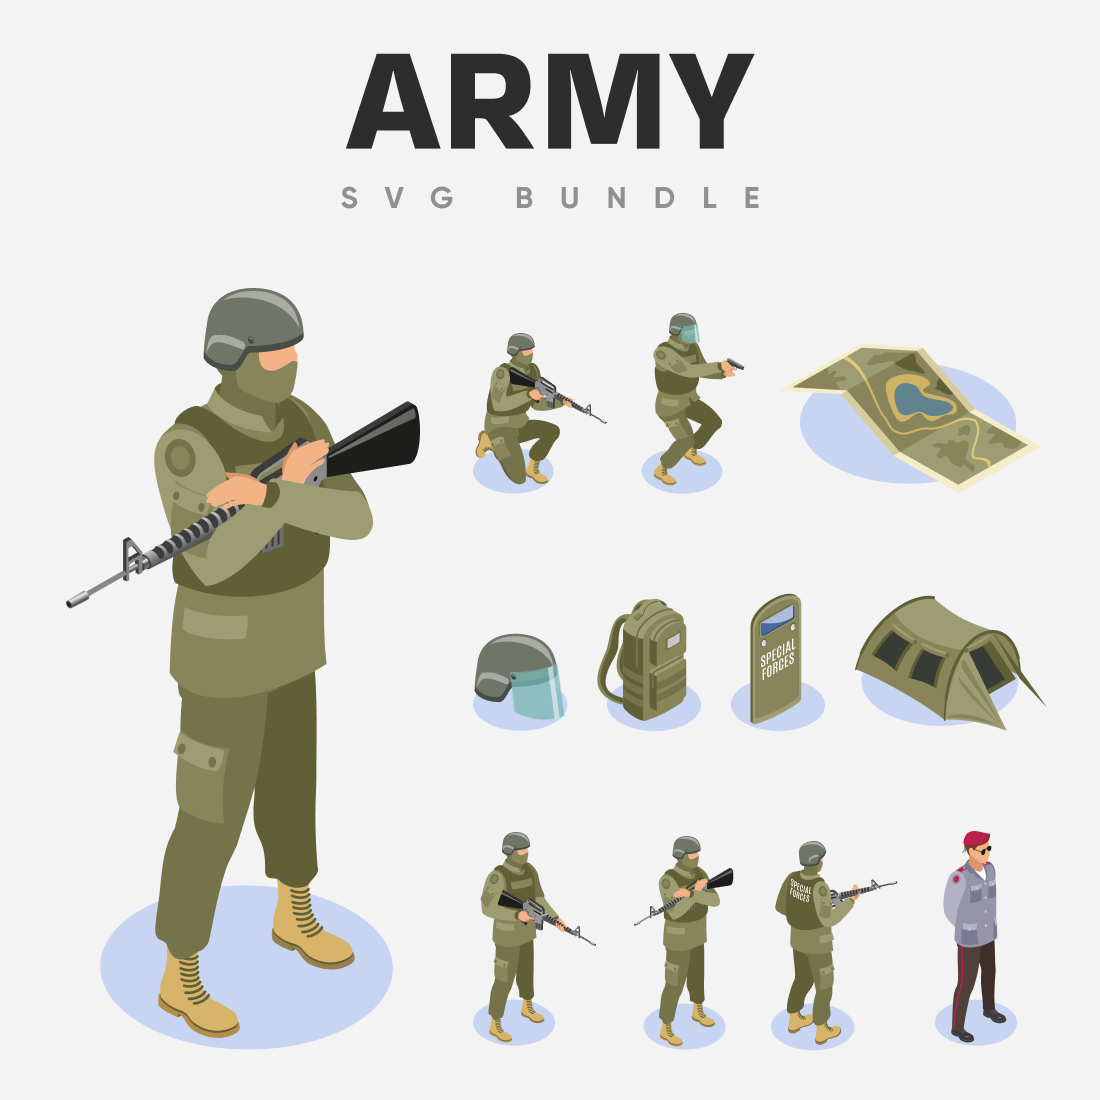 Valiant army SVG bundle.